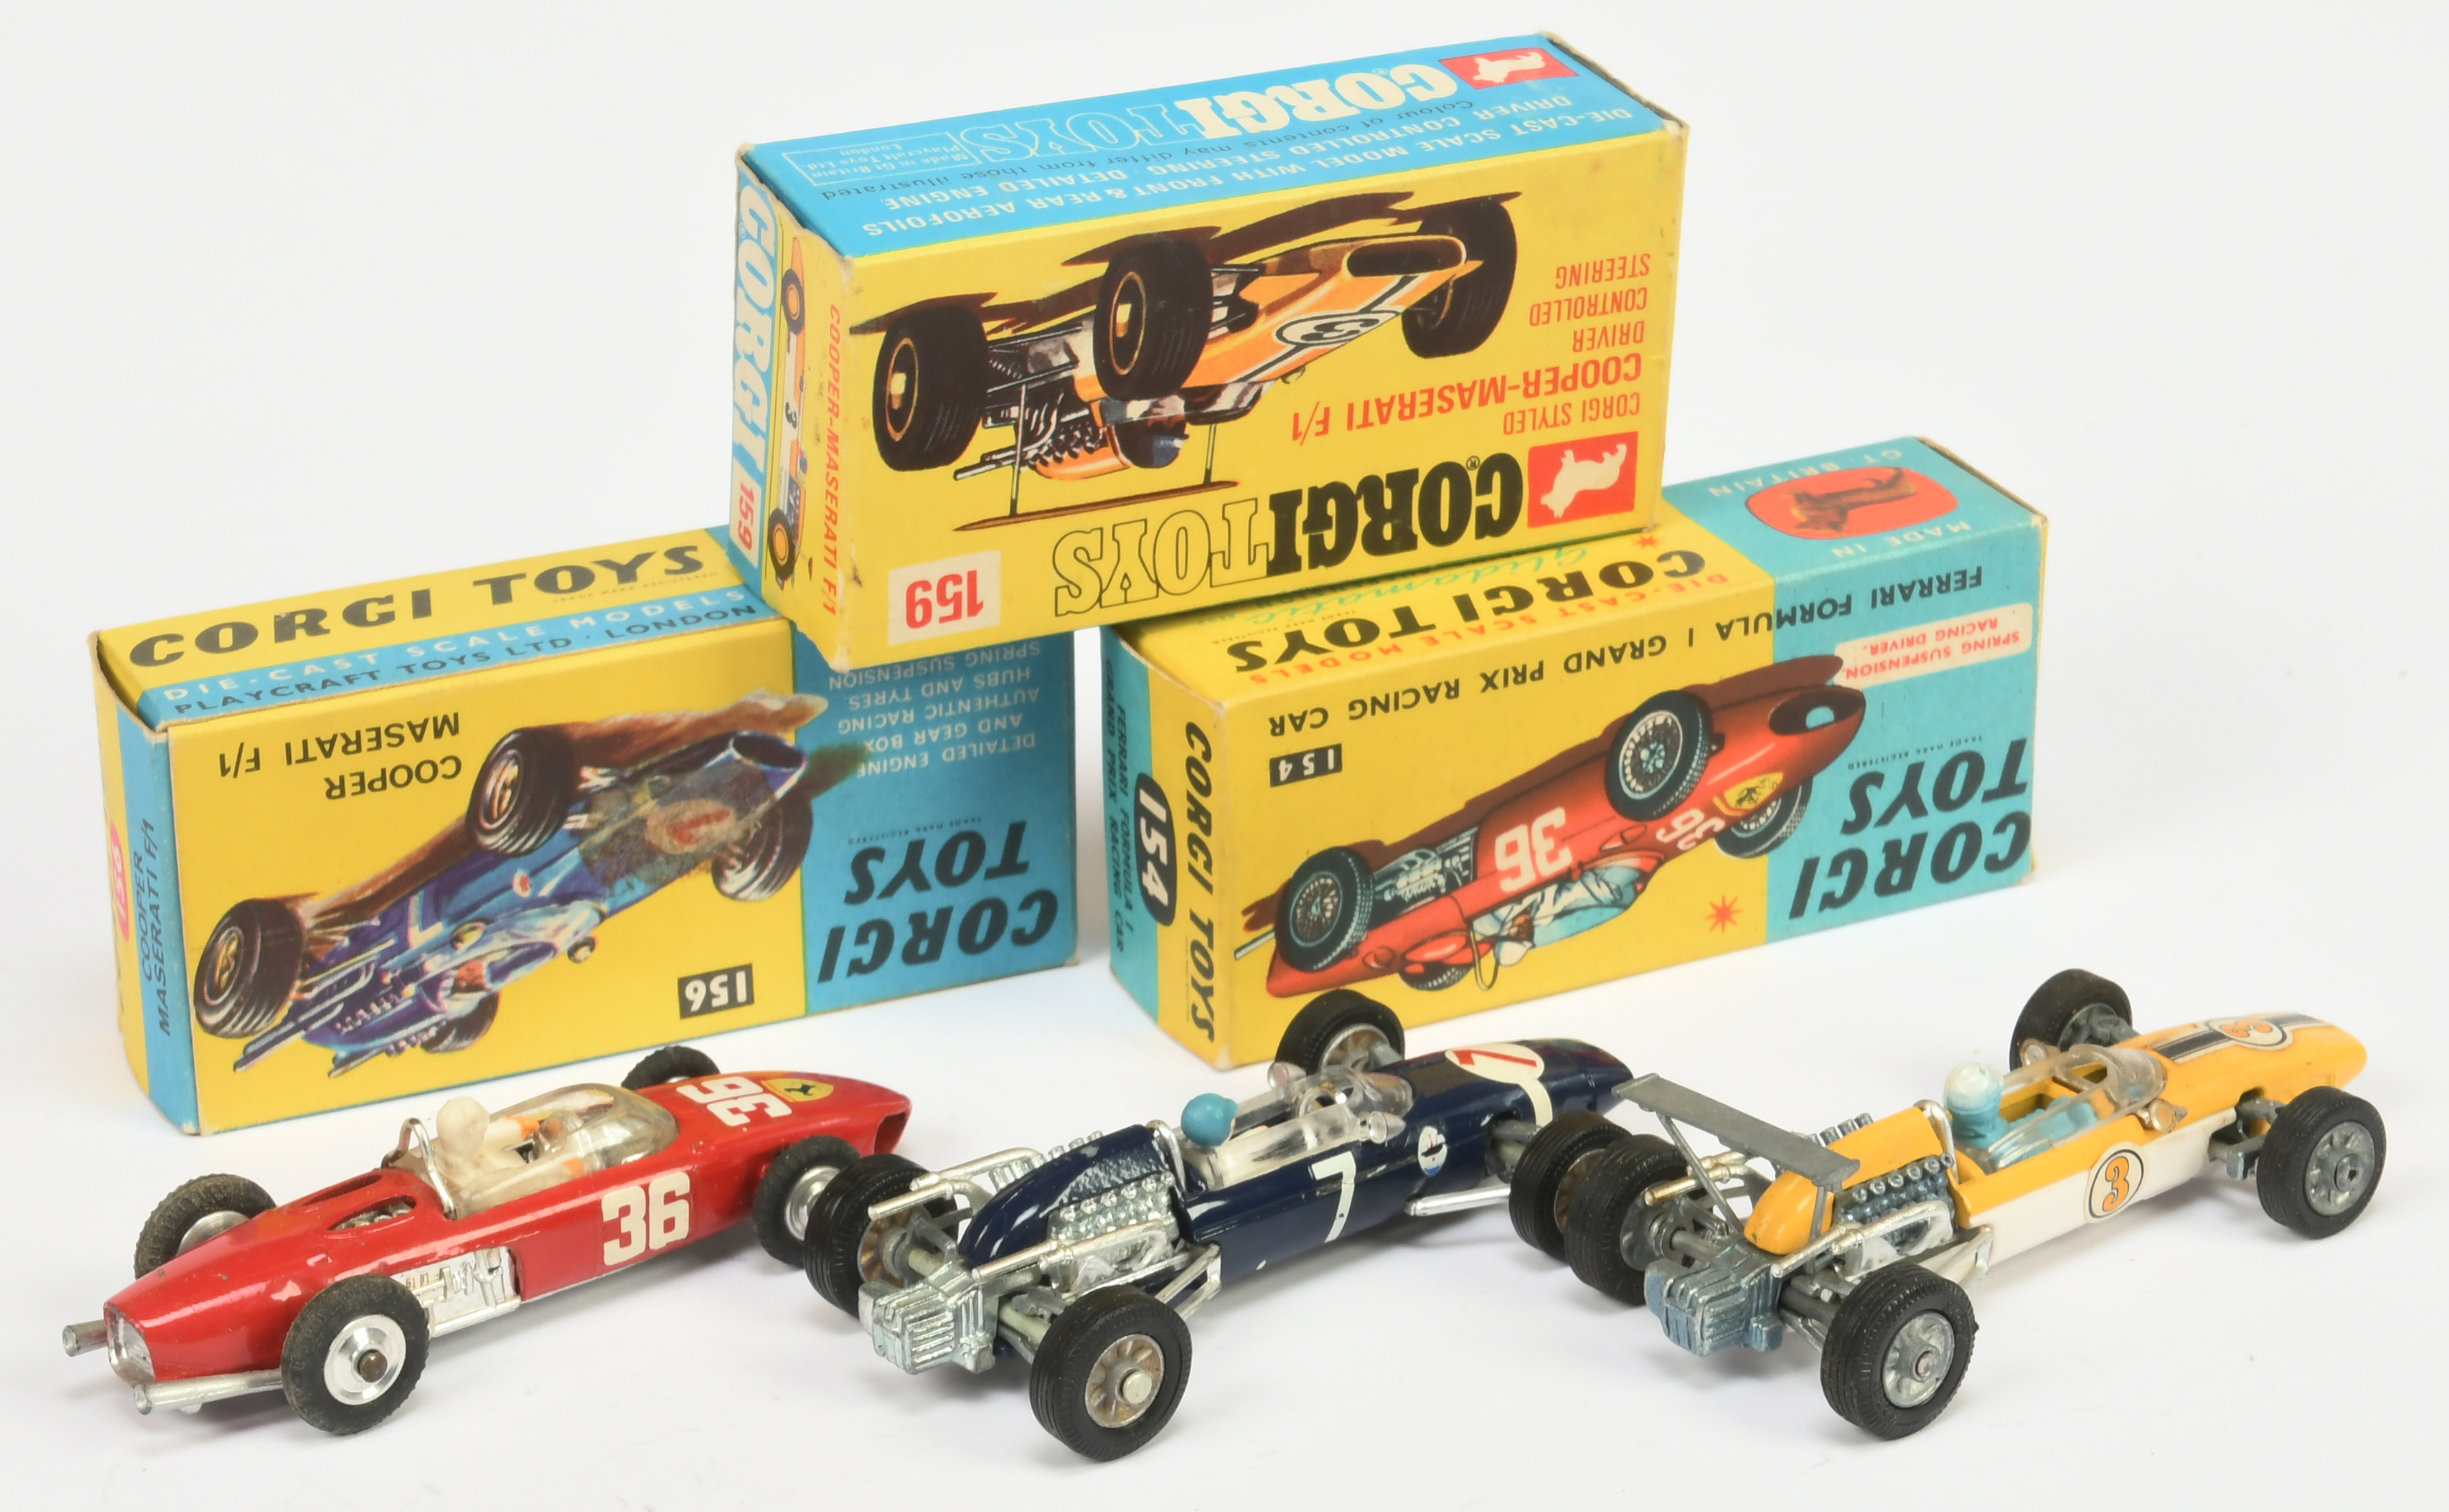 Corgi Toys Formula 1 Racing Cars Group Of 3 (1) 154 Ferrari - Red Body Silver and chrome trim, wi... - Image 2 of 2